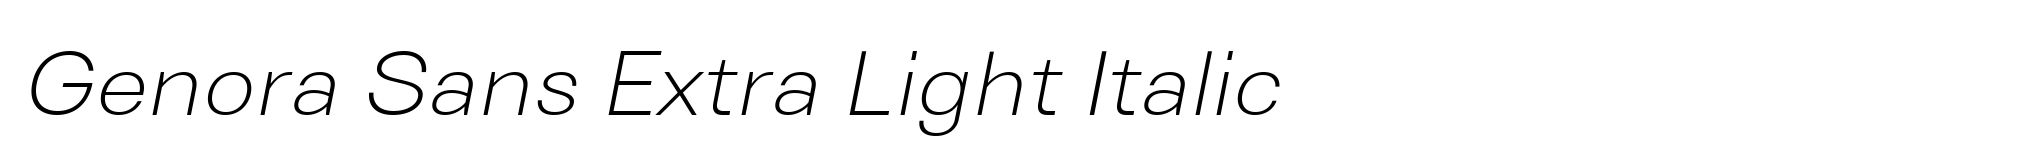 Genora Sans Extra Light Italic image